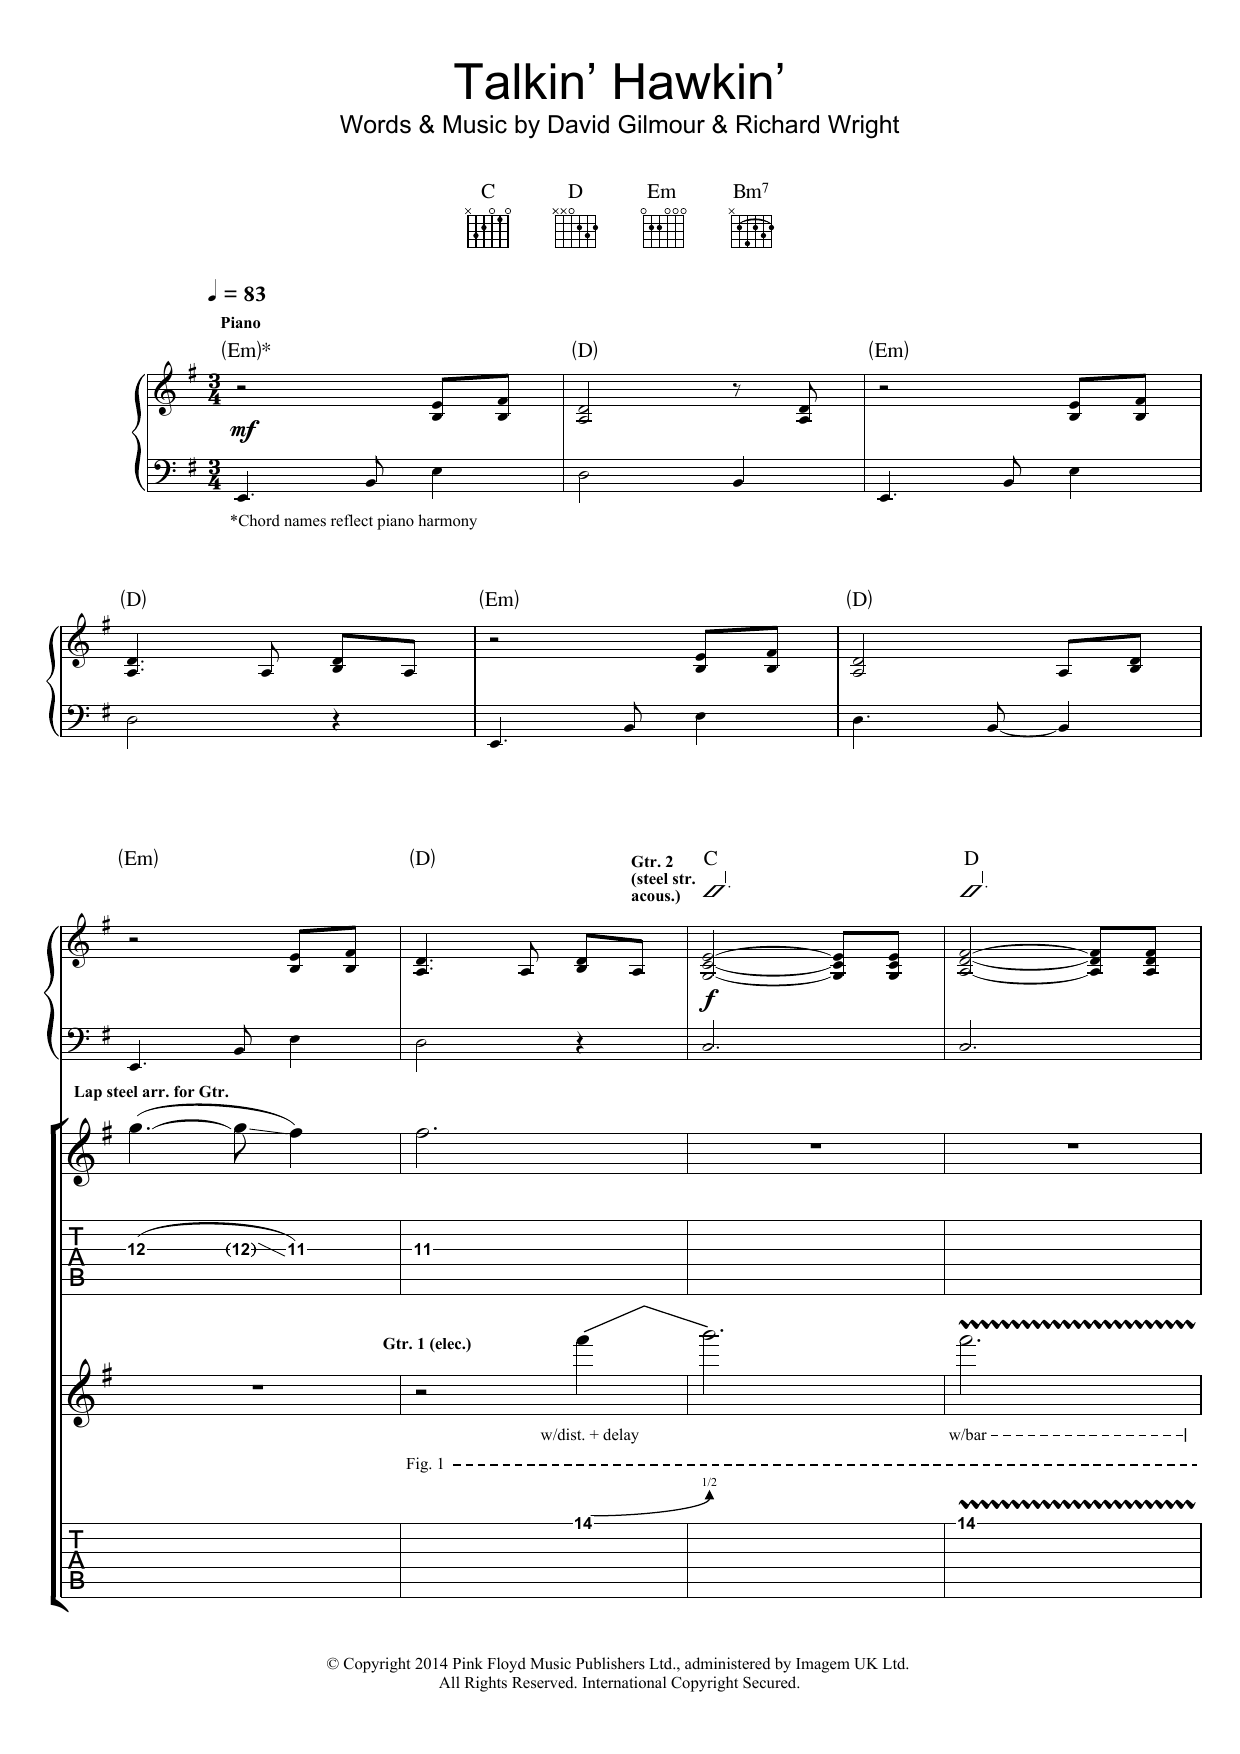 Download Pink Floyd Talkin' Hawkin' Sheet Music and learn how to play Guitar Tab PDF digital score in minutes